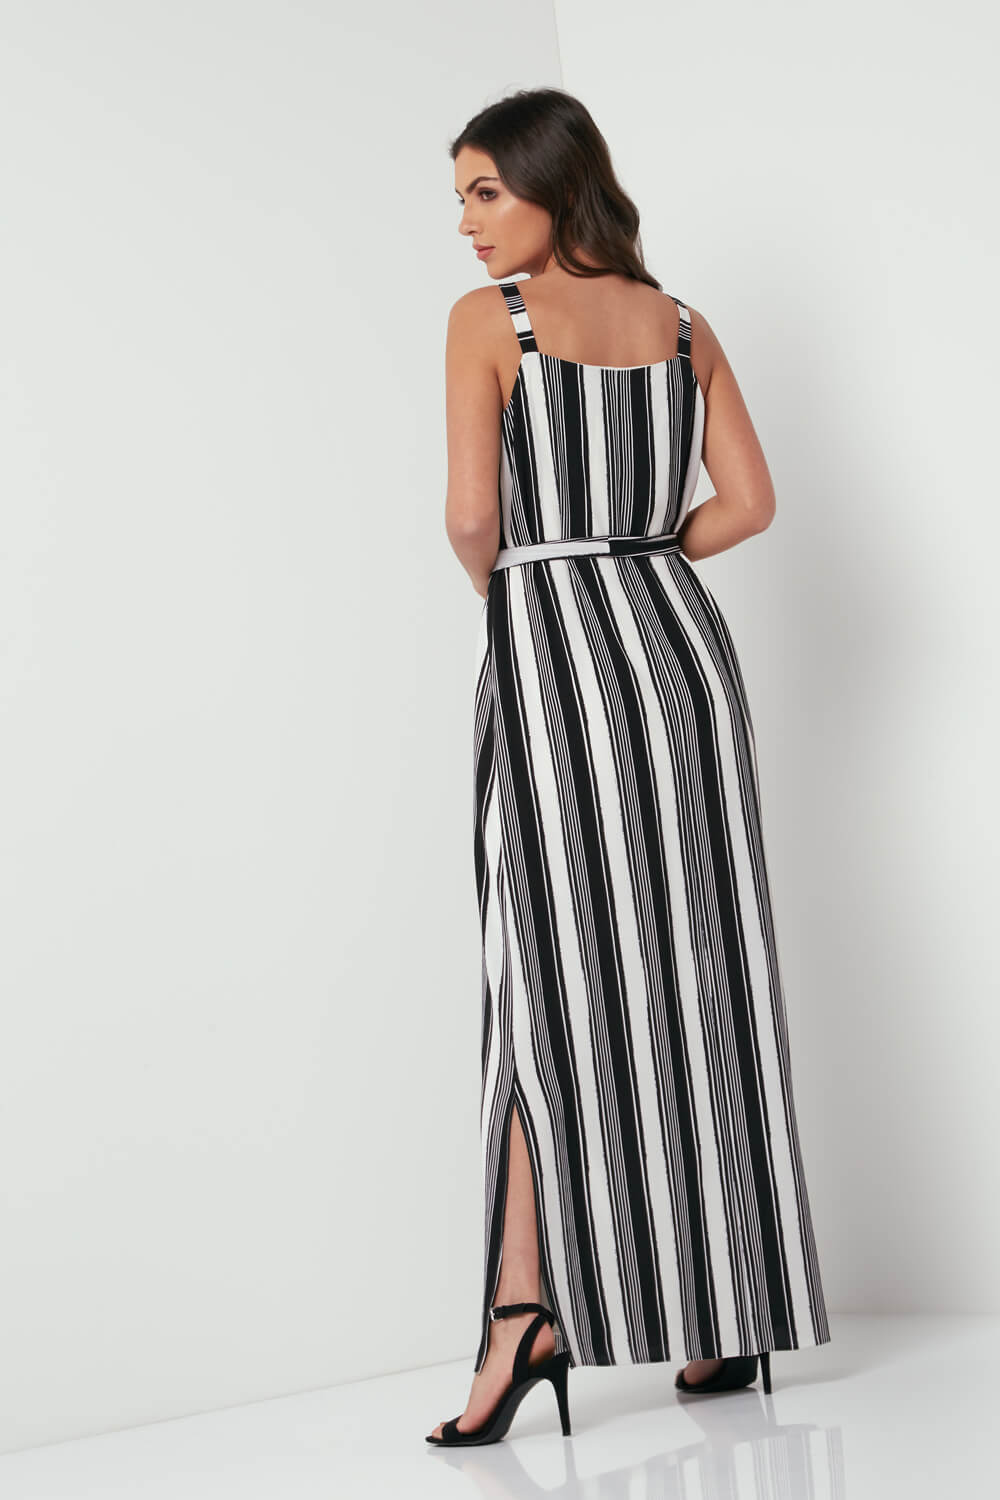 White Monochrome Stripe Maxi Dress, Image 2 of 4